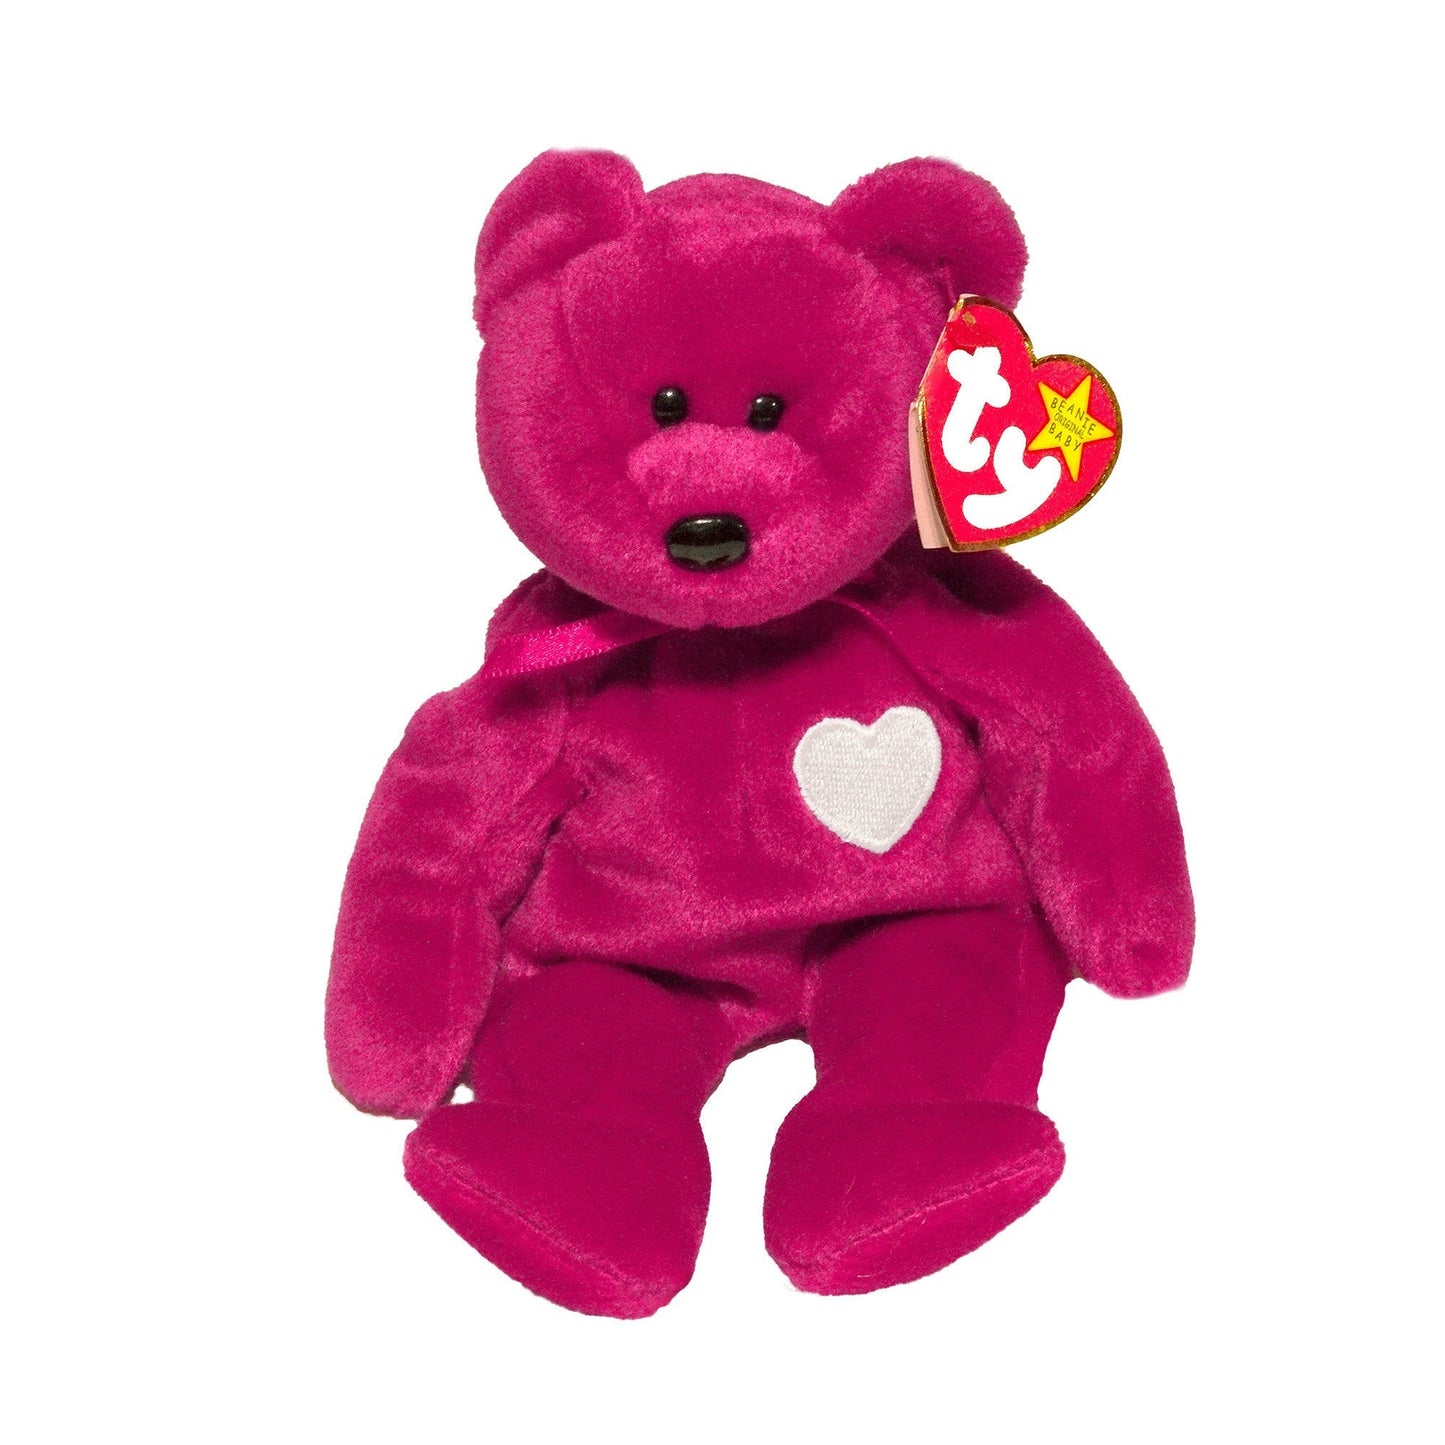 1998 TY VALENTINA Pink Original Beanie Baby Stuffed Bear Doll Toy 